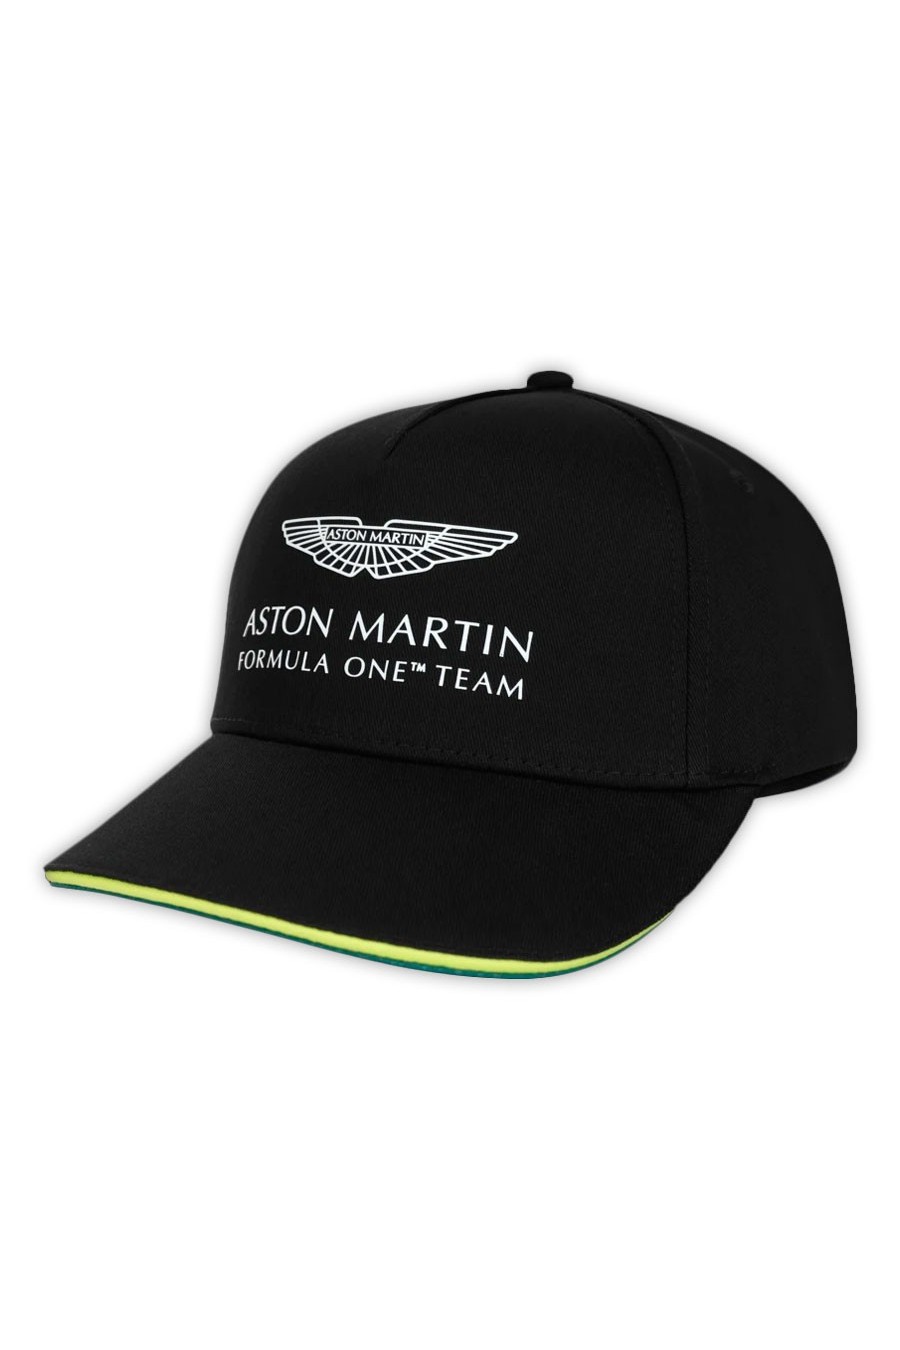 Aston Martin F1 schwarze Kappe